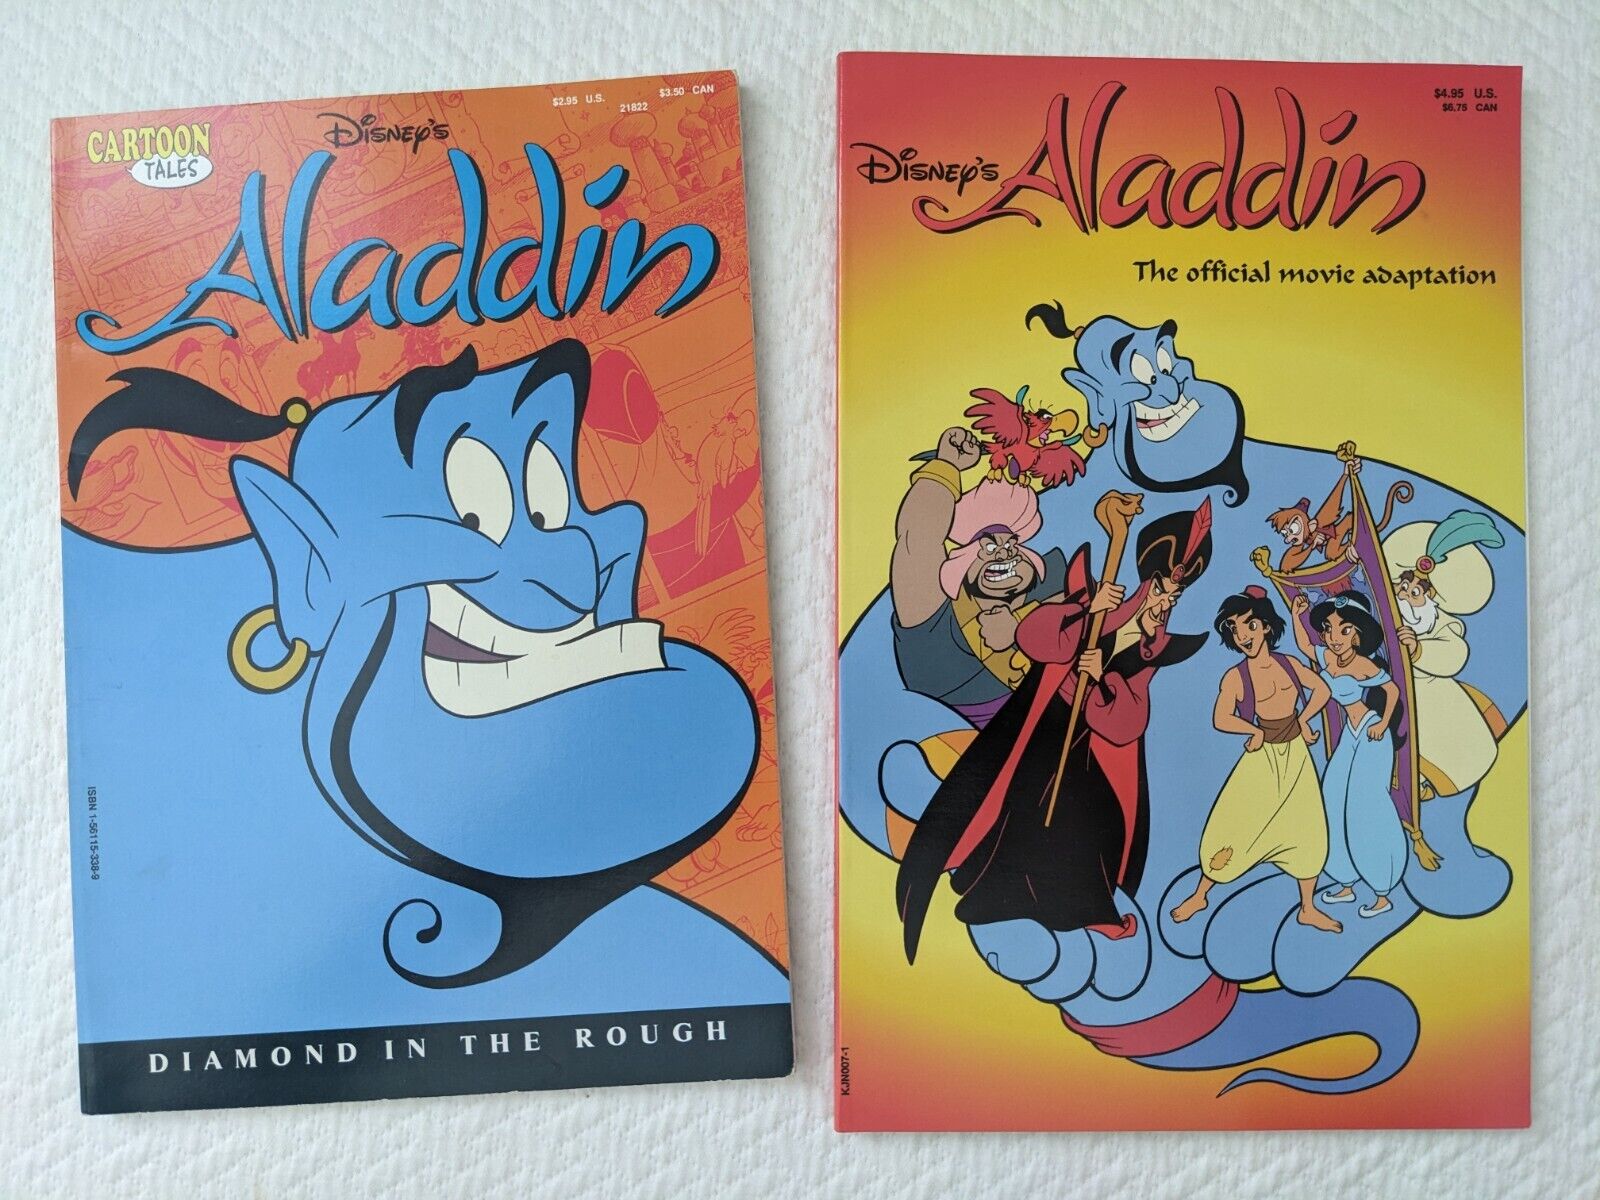 Aladdin Official Movie Adaptation 1992 two versions rare vintage Cartoon Tales